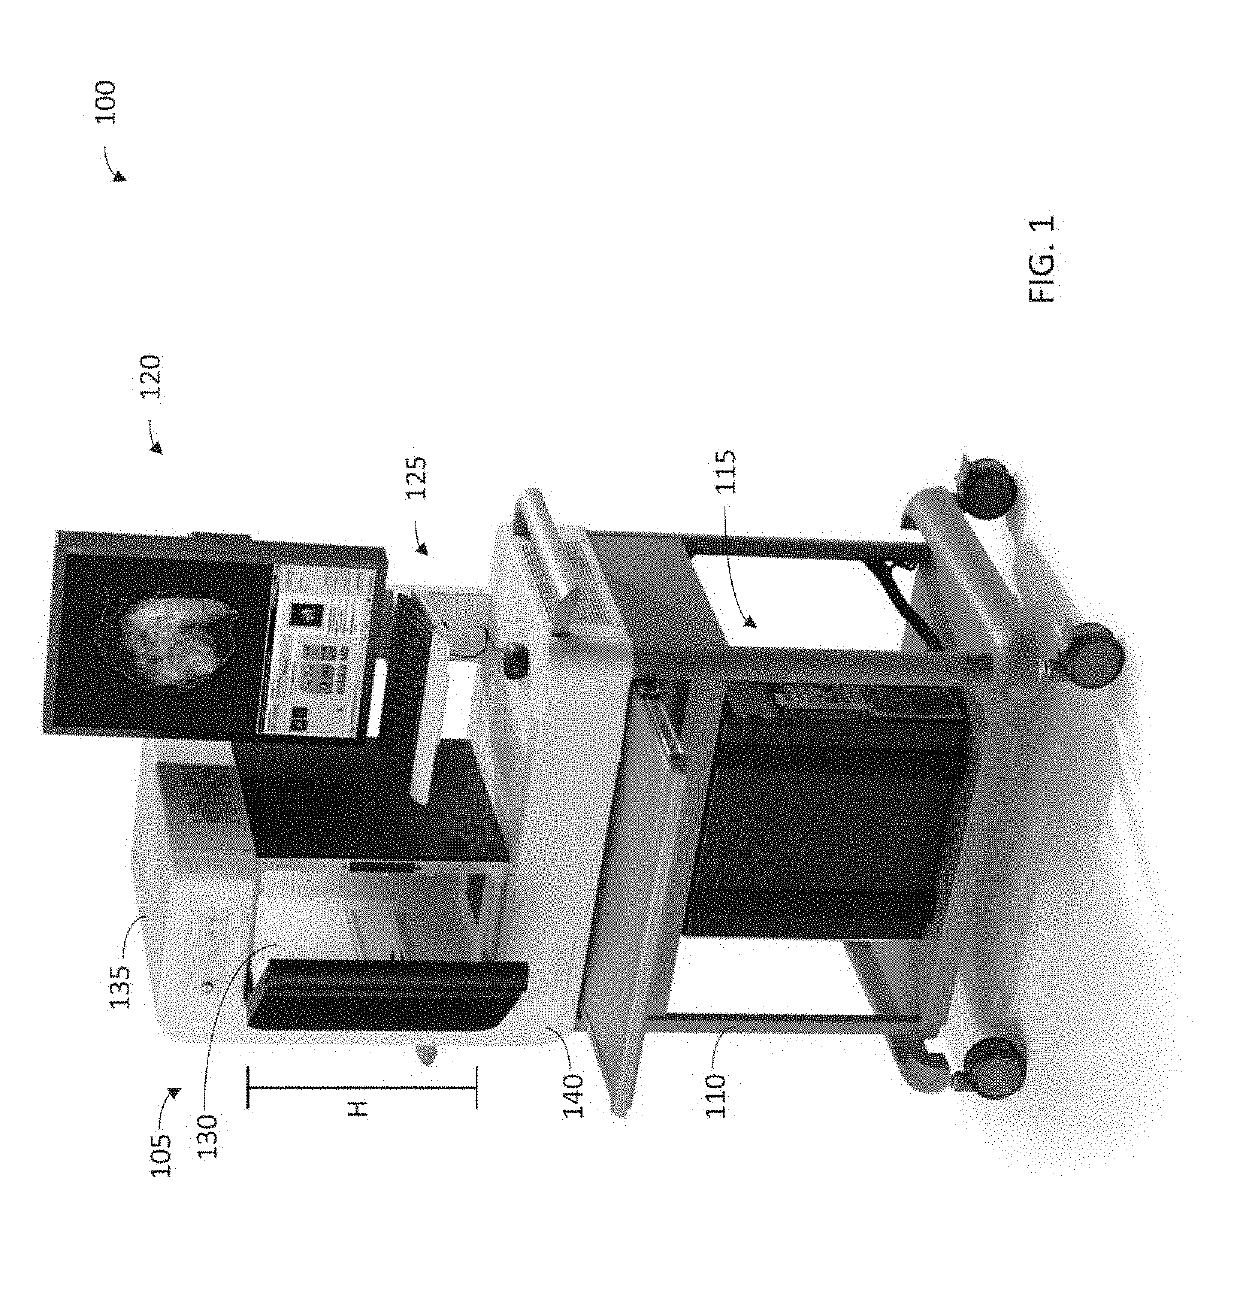 Specimen radiography system